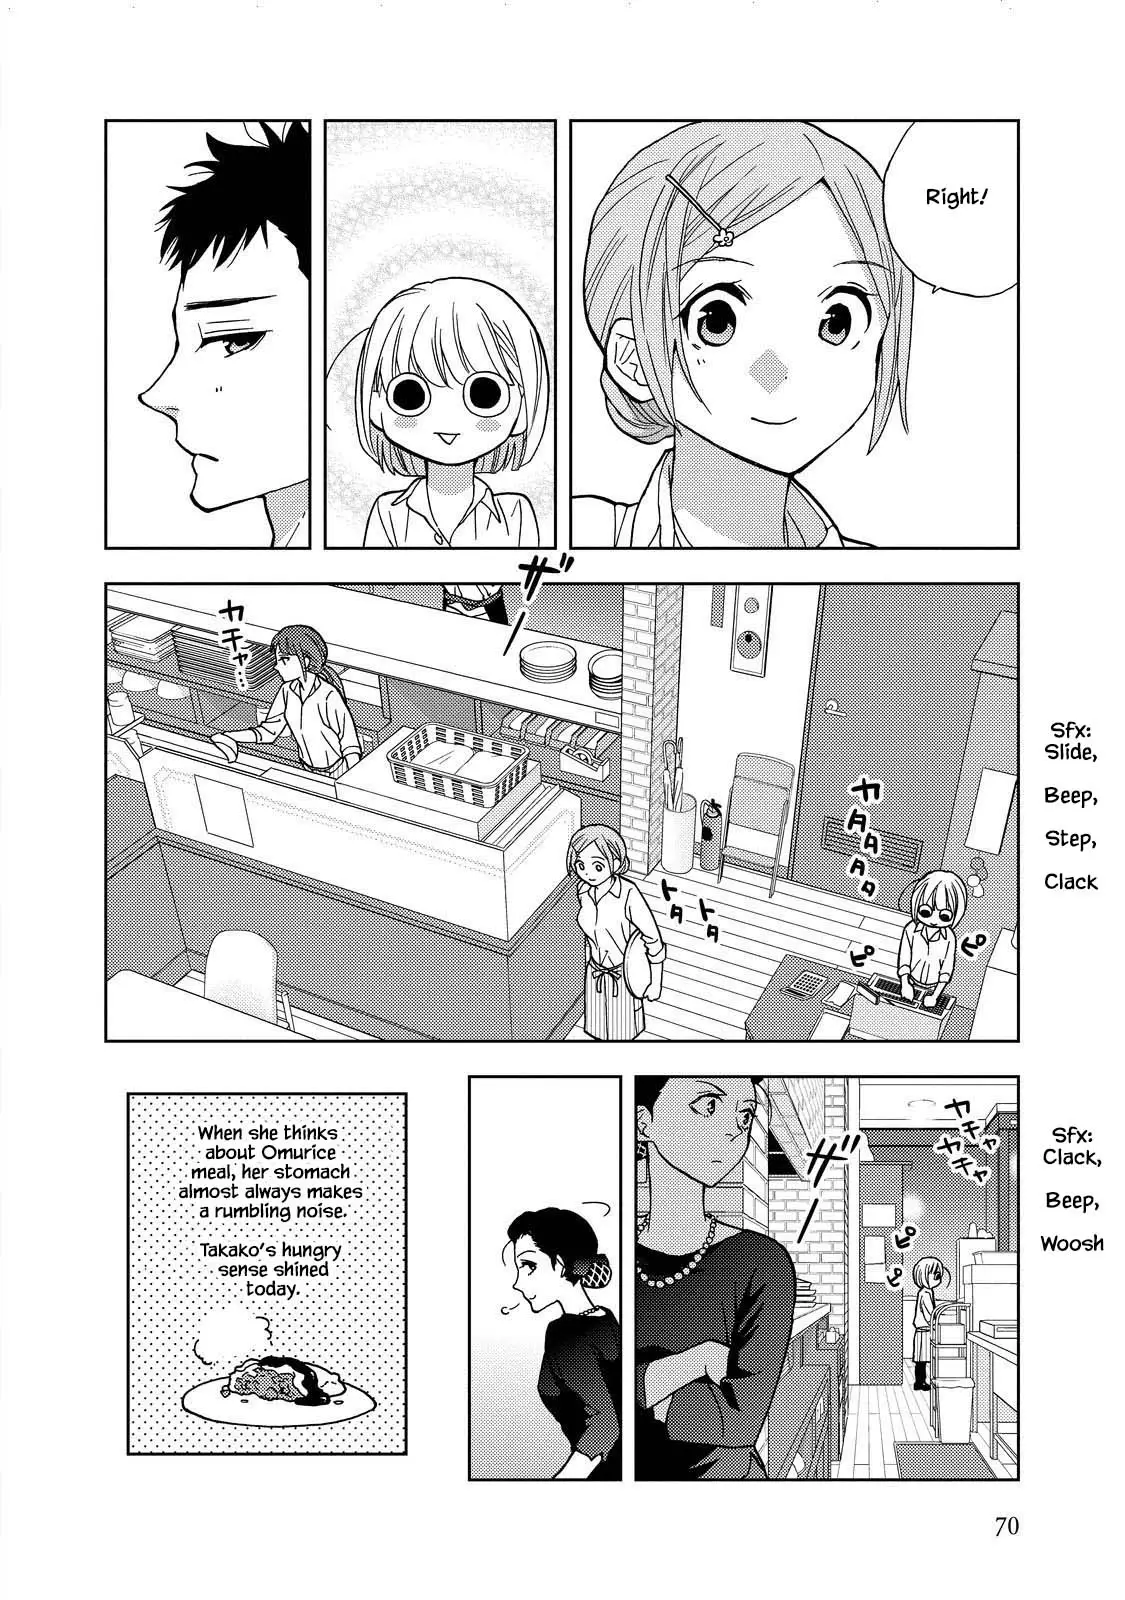 Takako-San - 20 page 10-8992f153